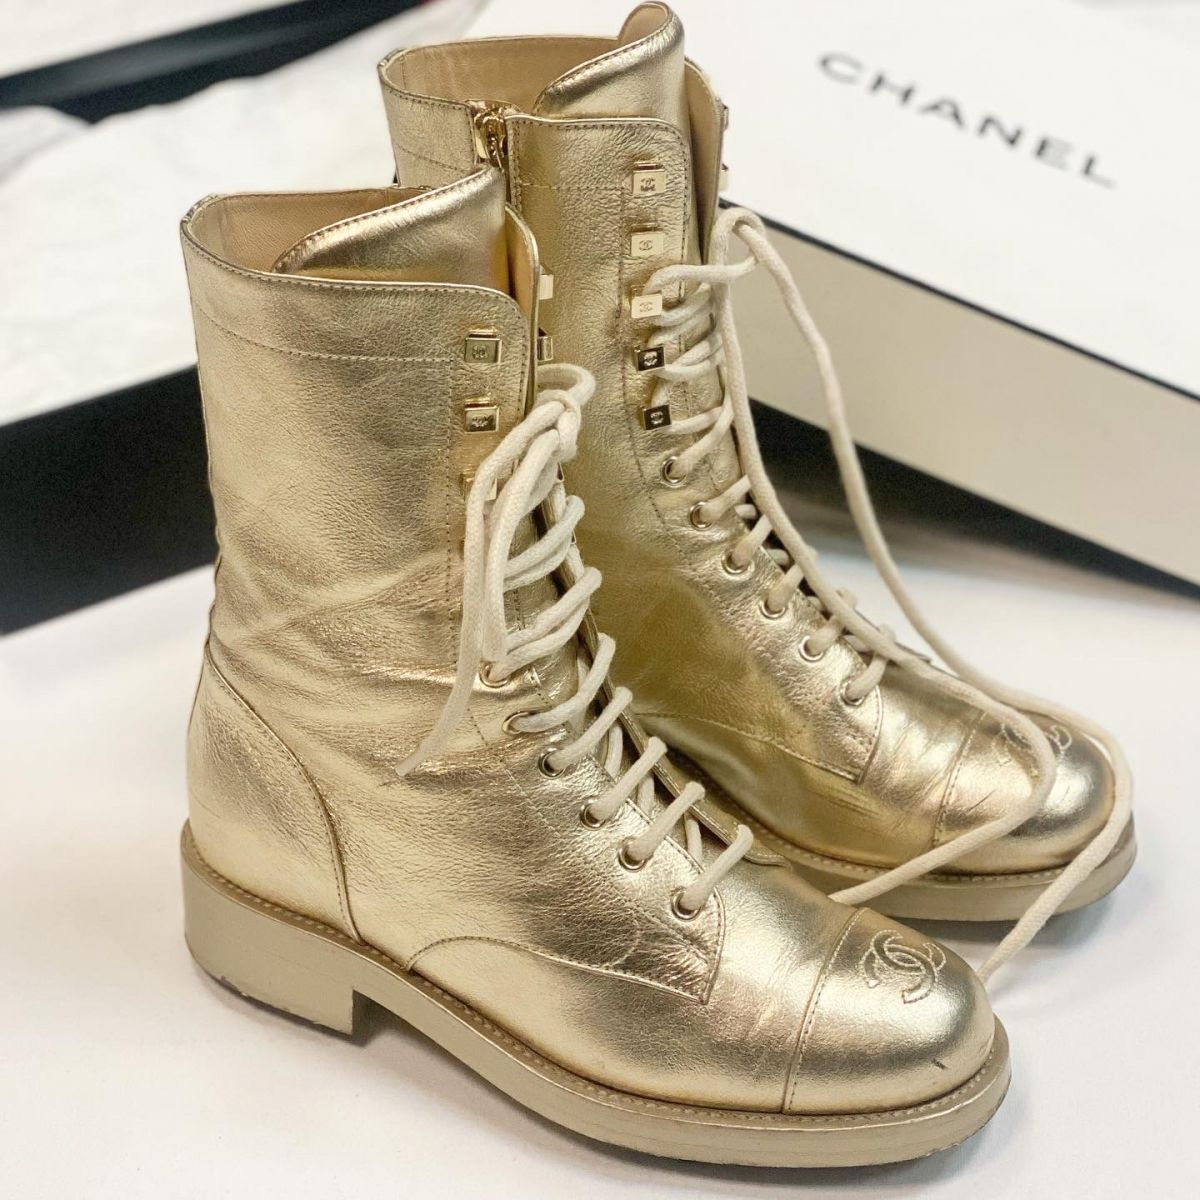 Ботинки Chanel размер 38 цена 26 155 руб 